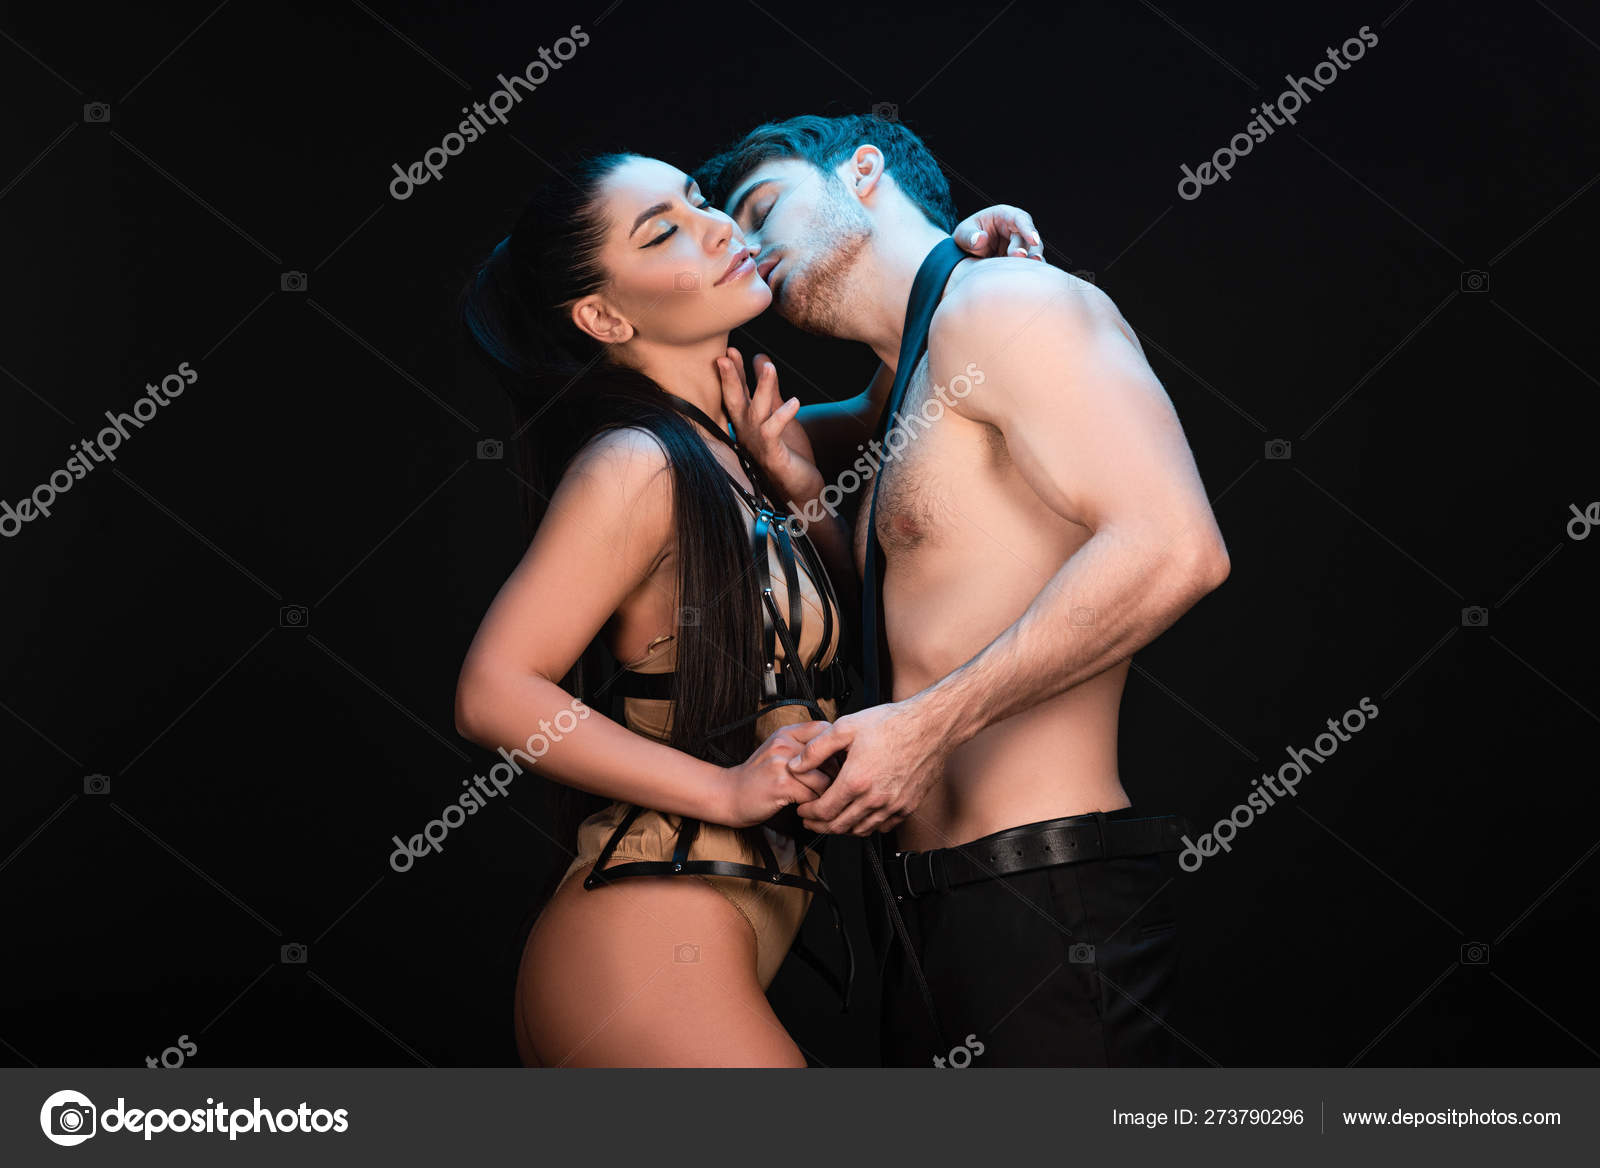 Bdsm Couple Embracing Kissing Isolated Black Stock Photo by ©VitalikRadko 273790296